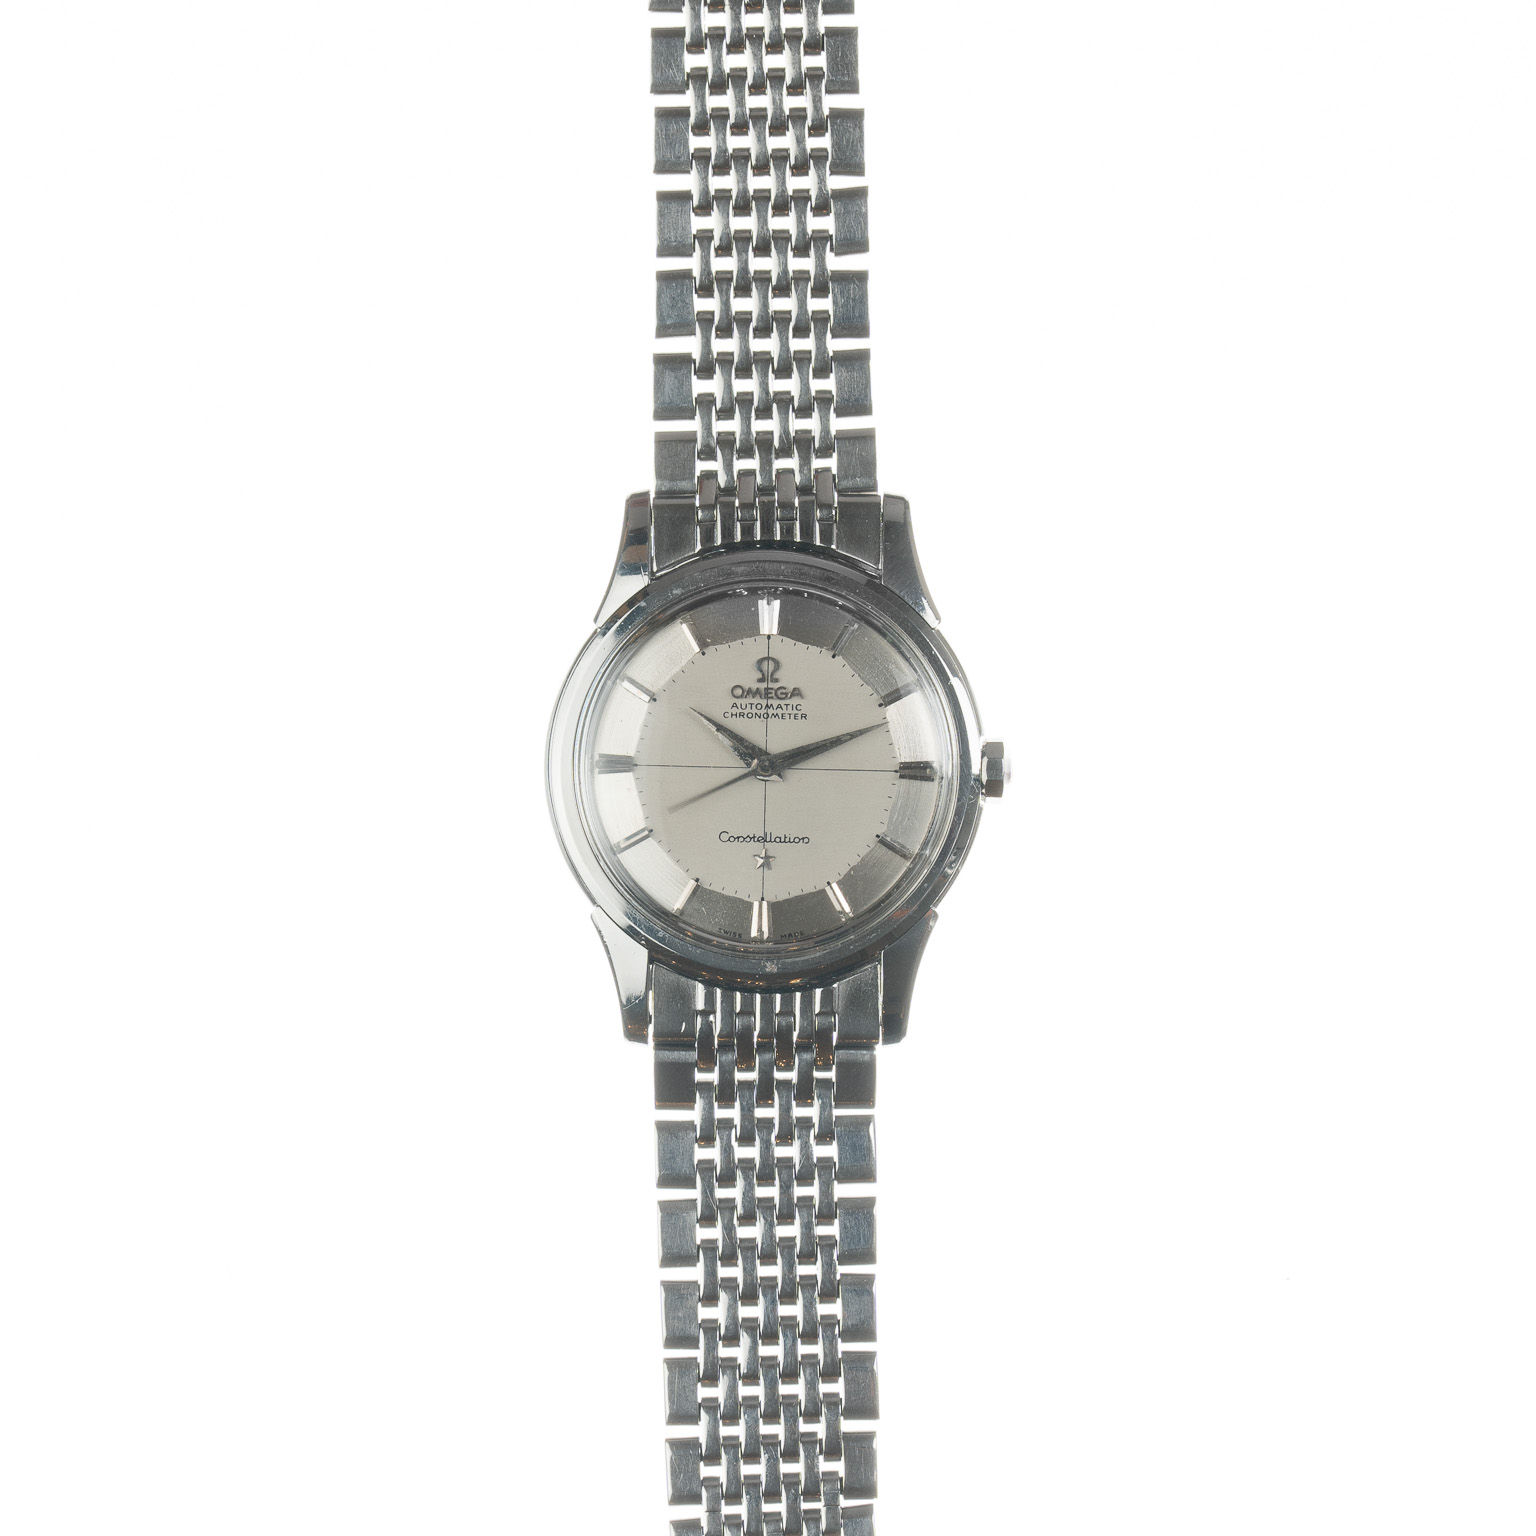 omega constellation 14381 horloge uit 1959